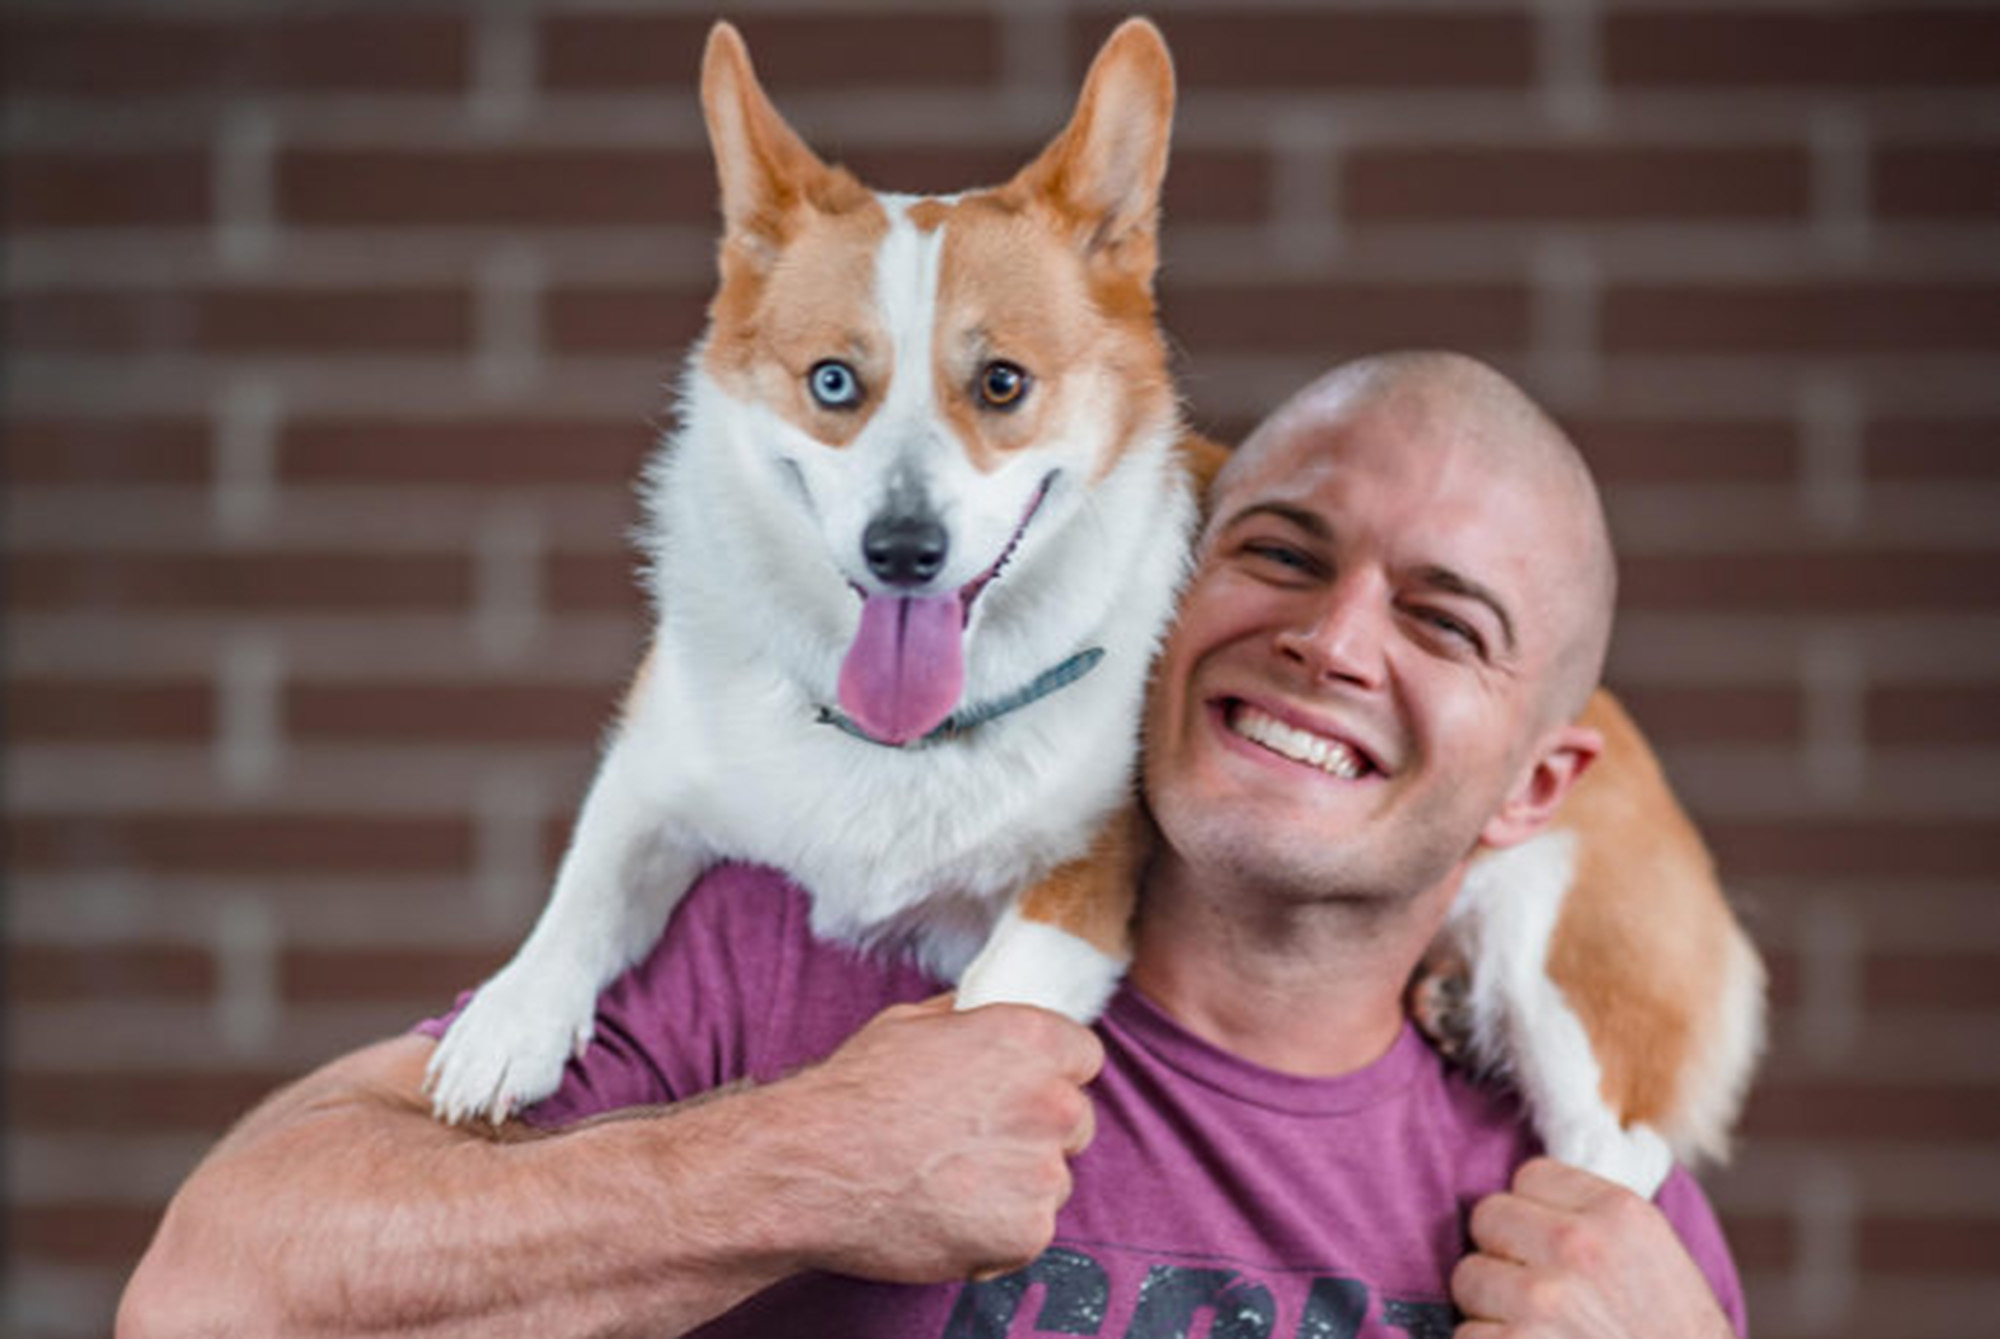 man holding dog talking about strength training program